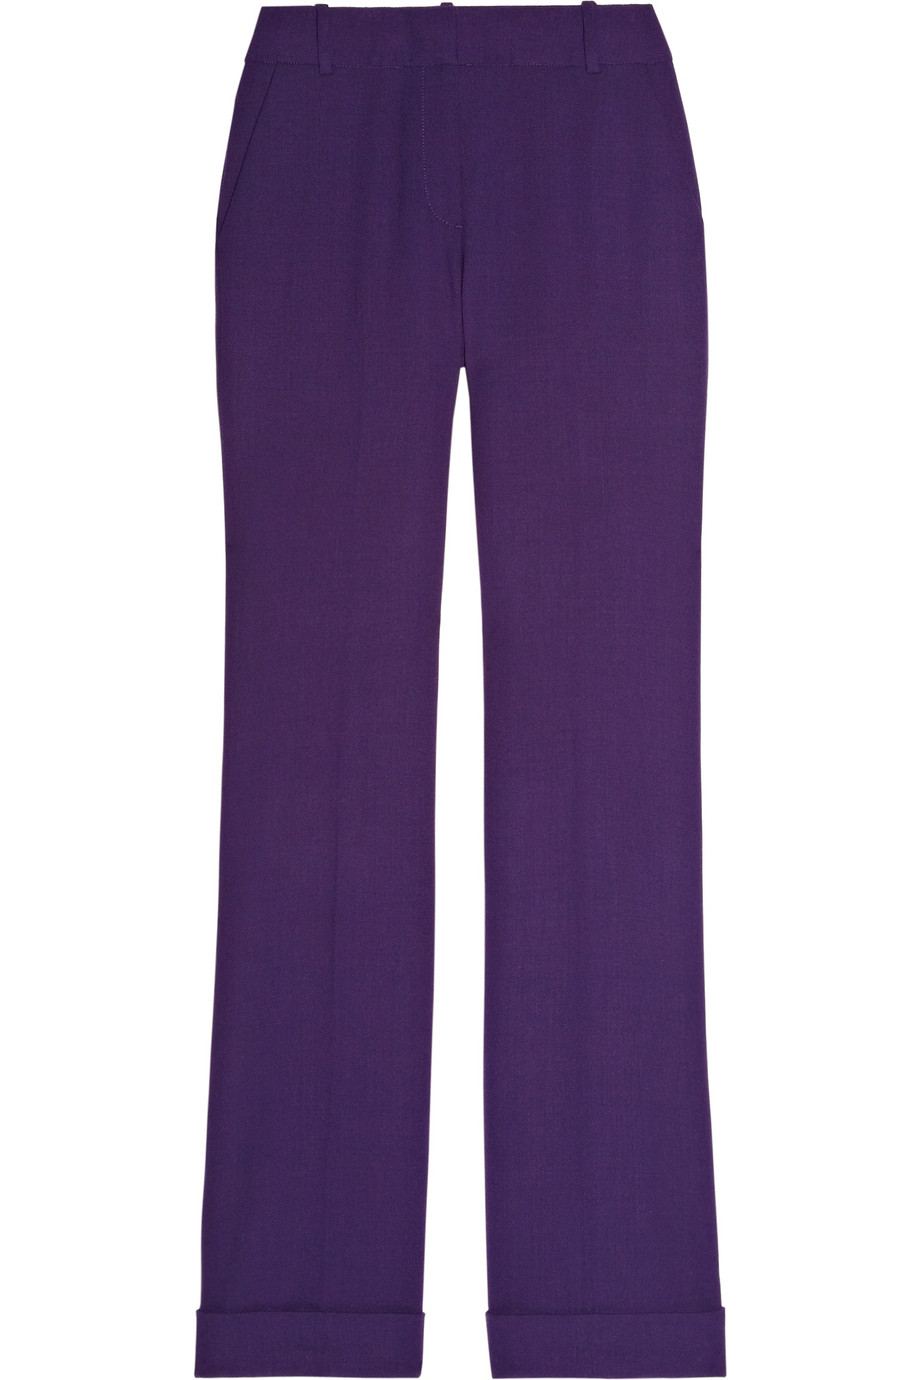 J.crew Hutton Stretch-wool Wide-leg Pants in Purple | Lyst